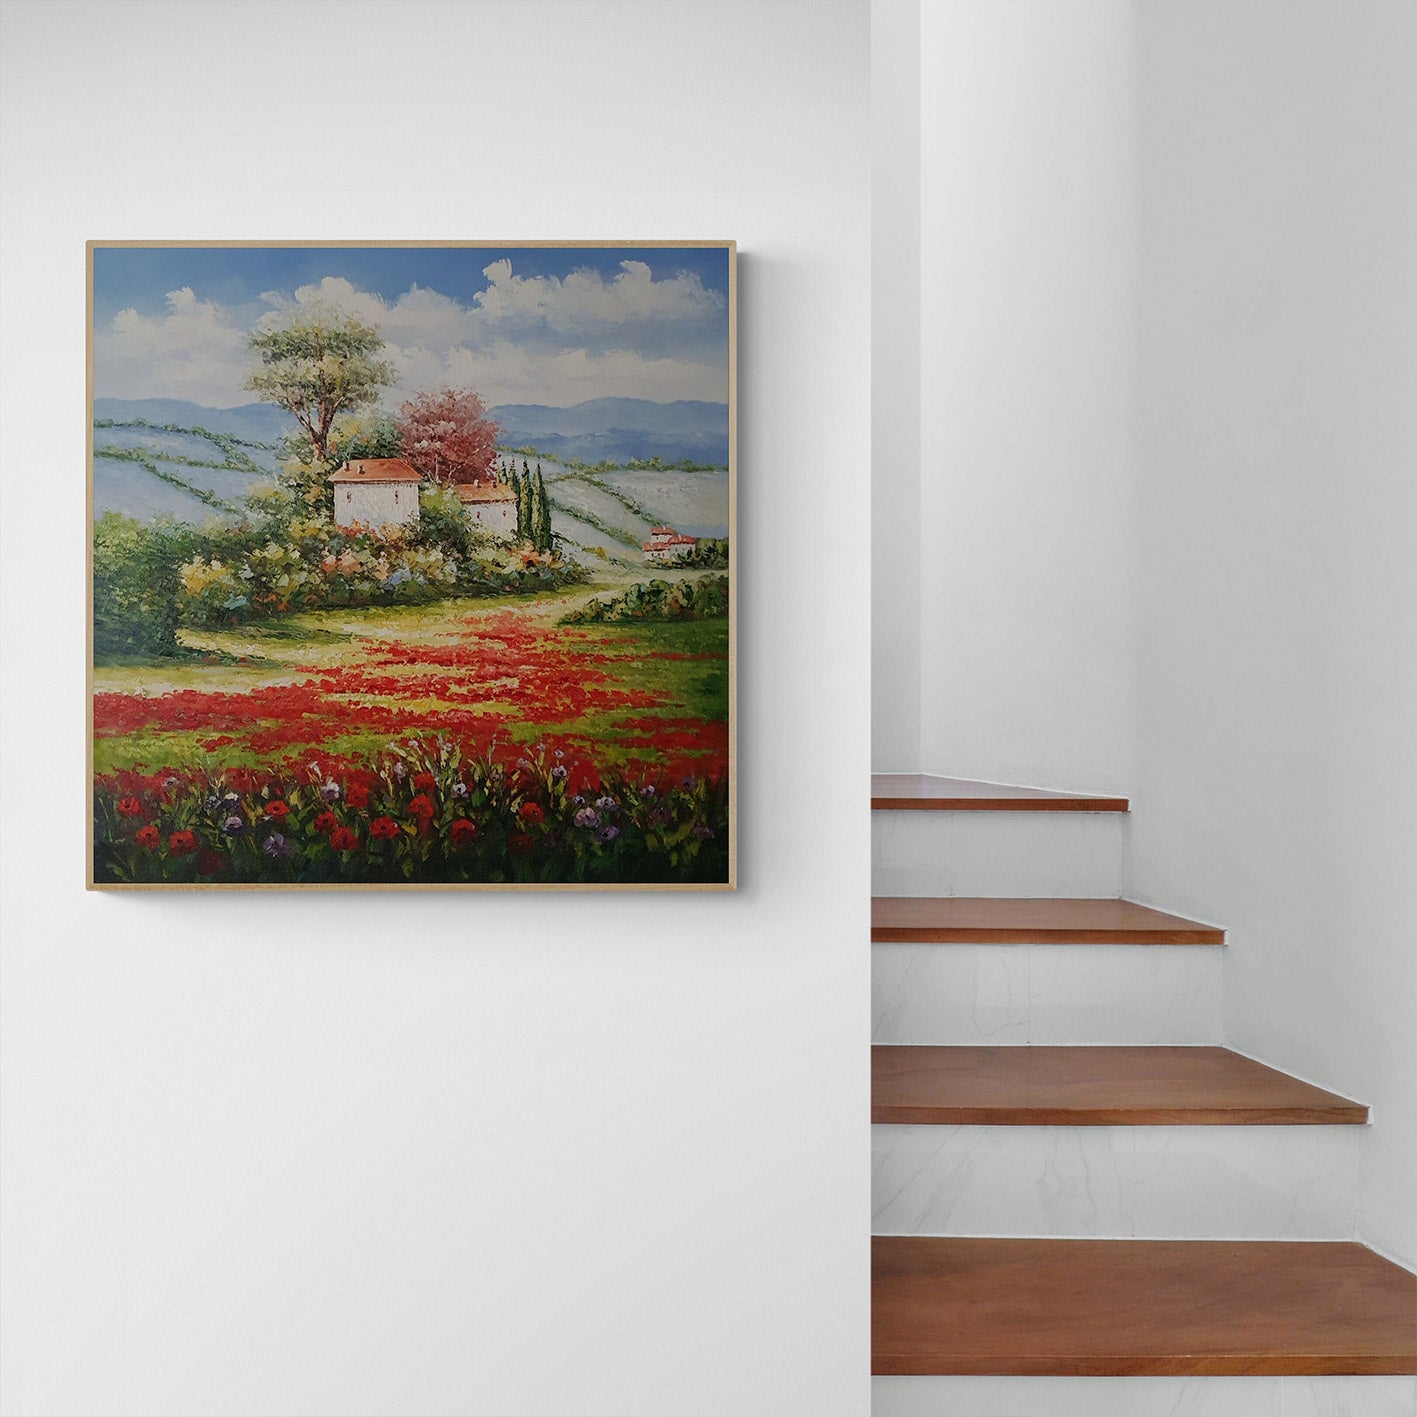 Poppies Landscape Painting 80x80 cm